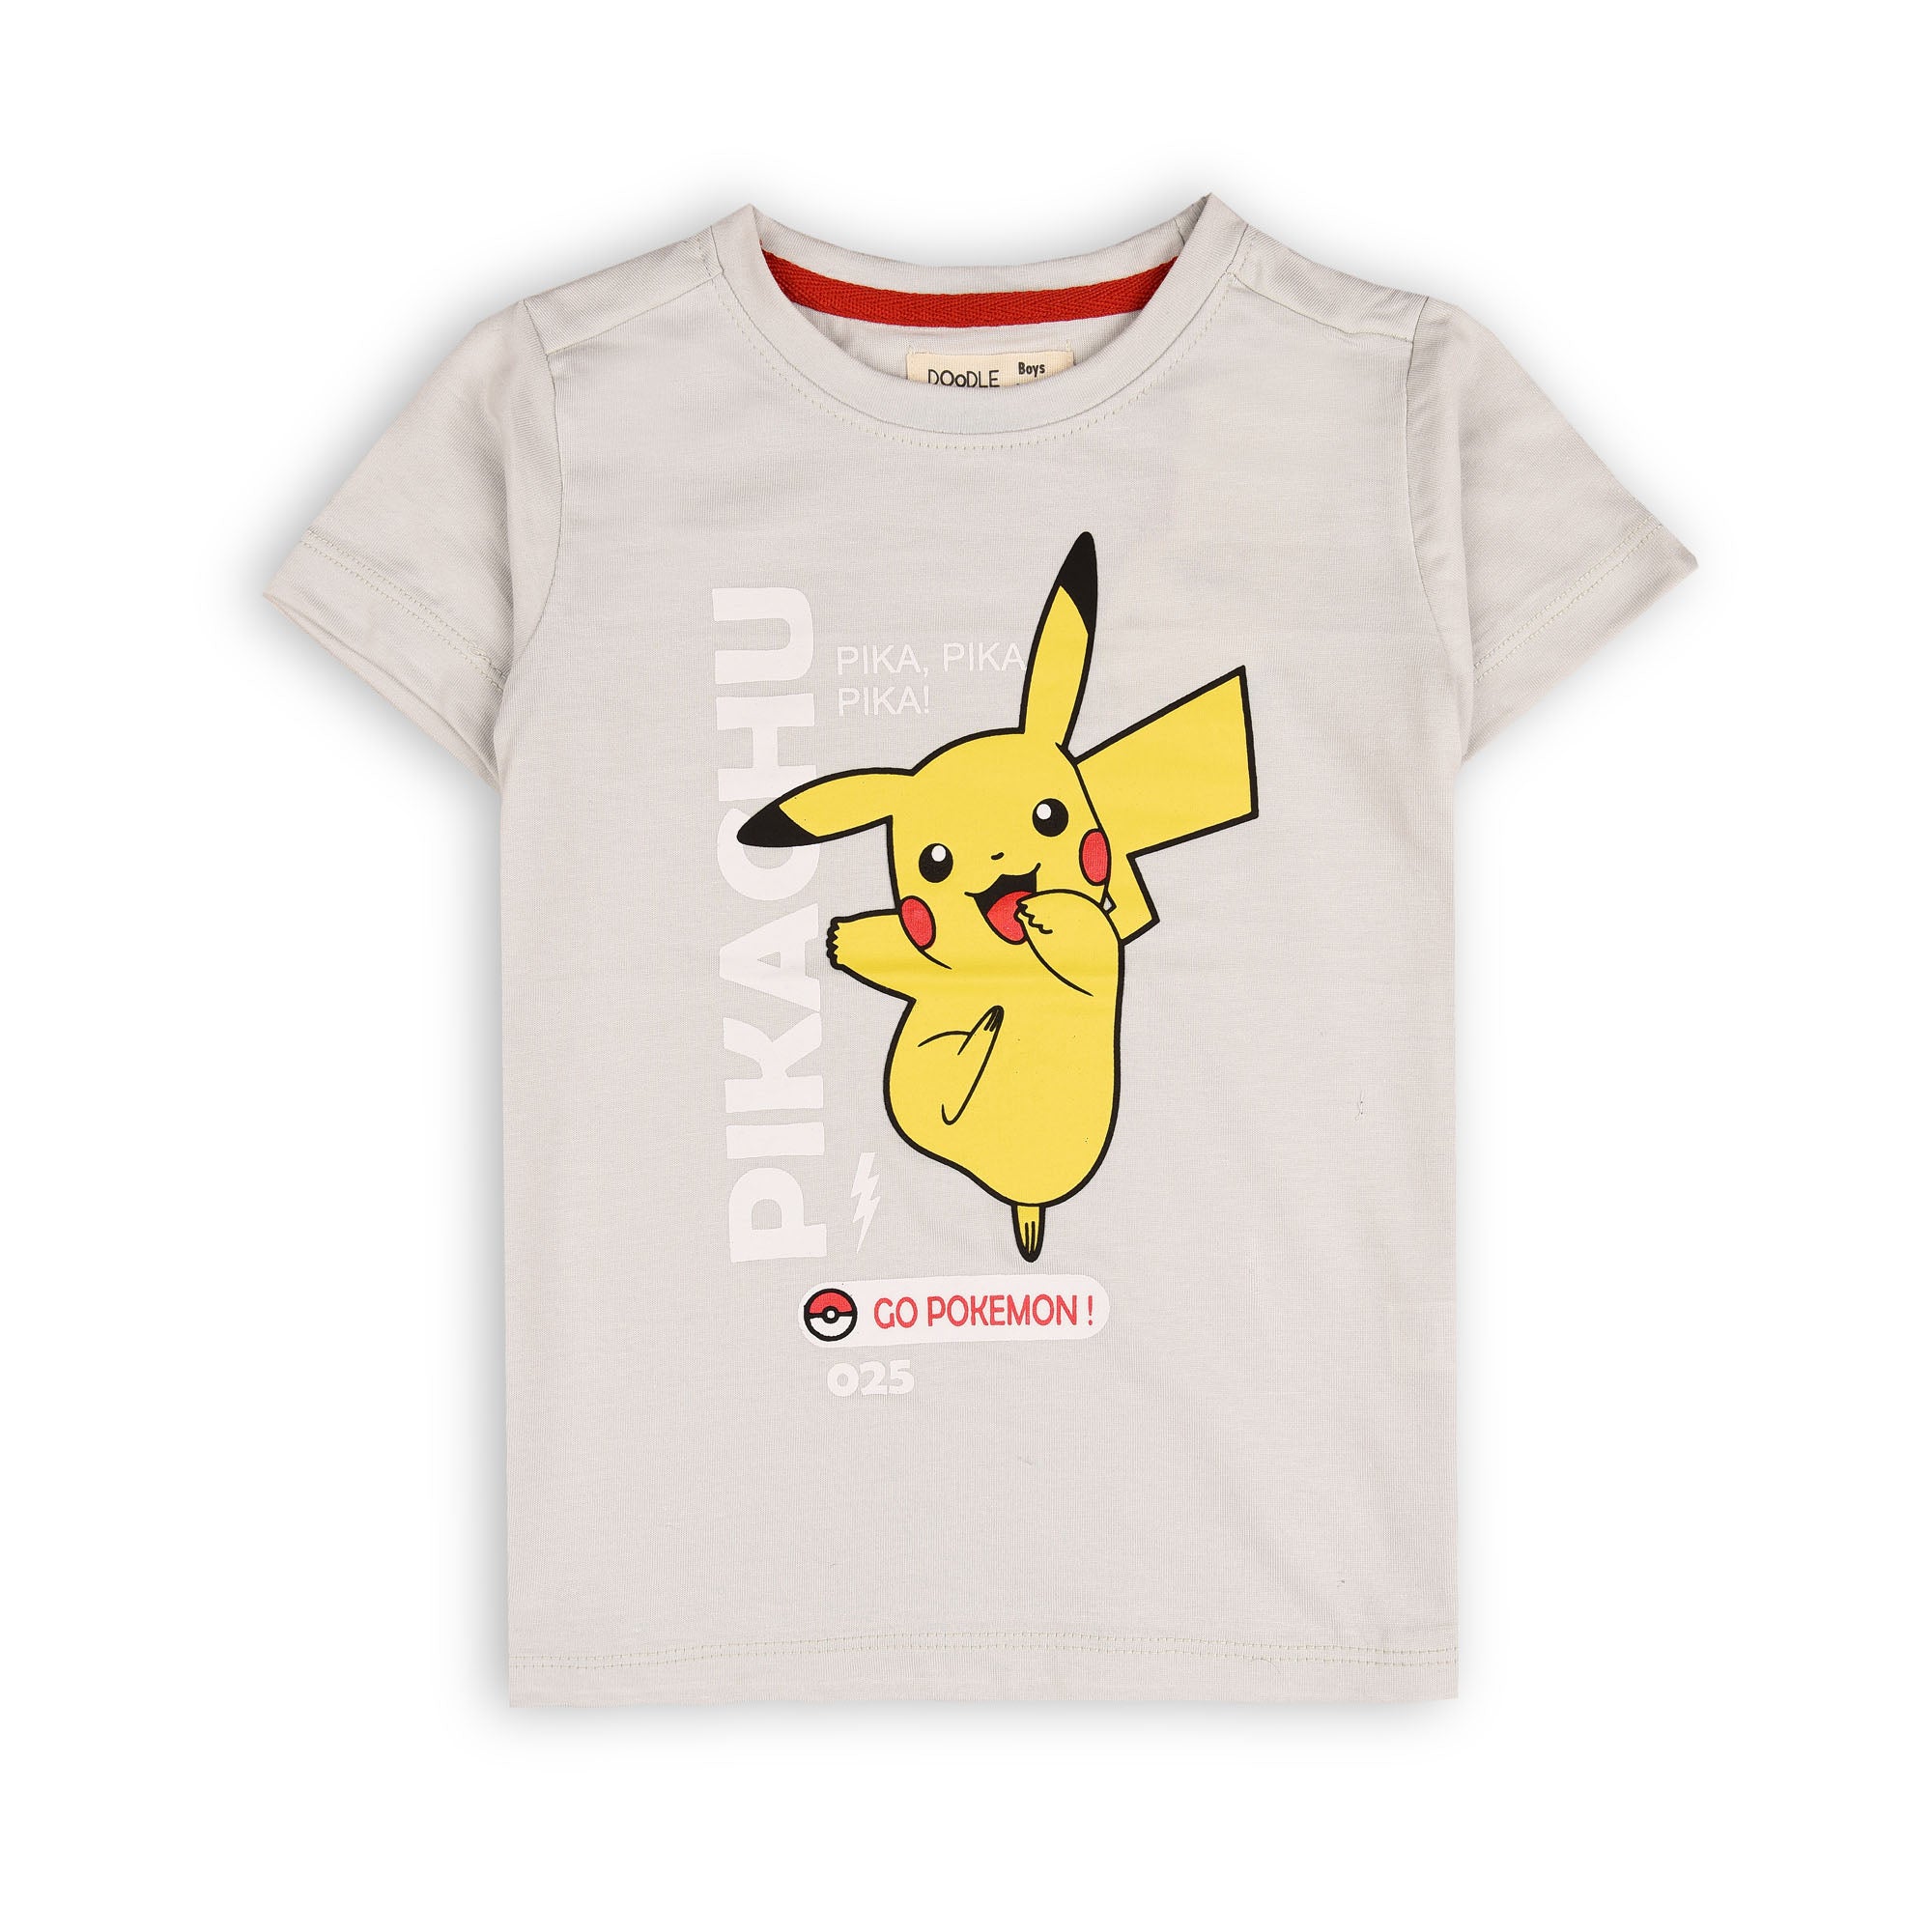 Pikachu Graphic Tee